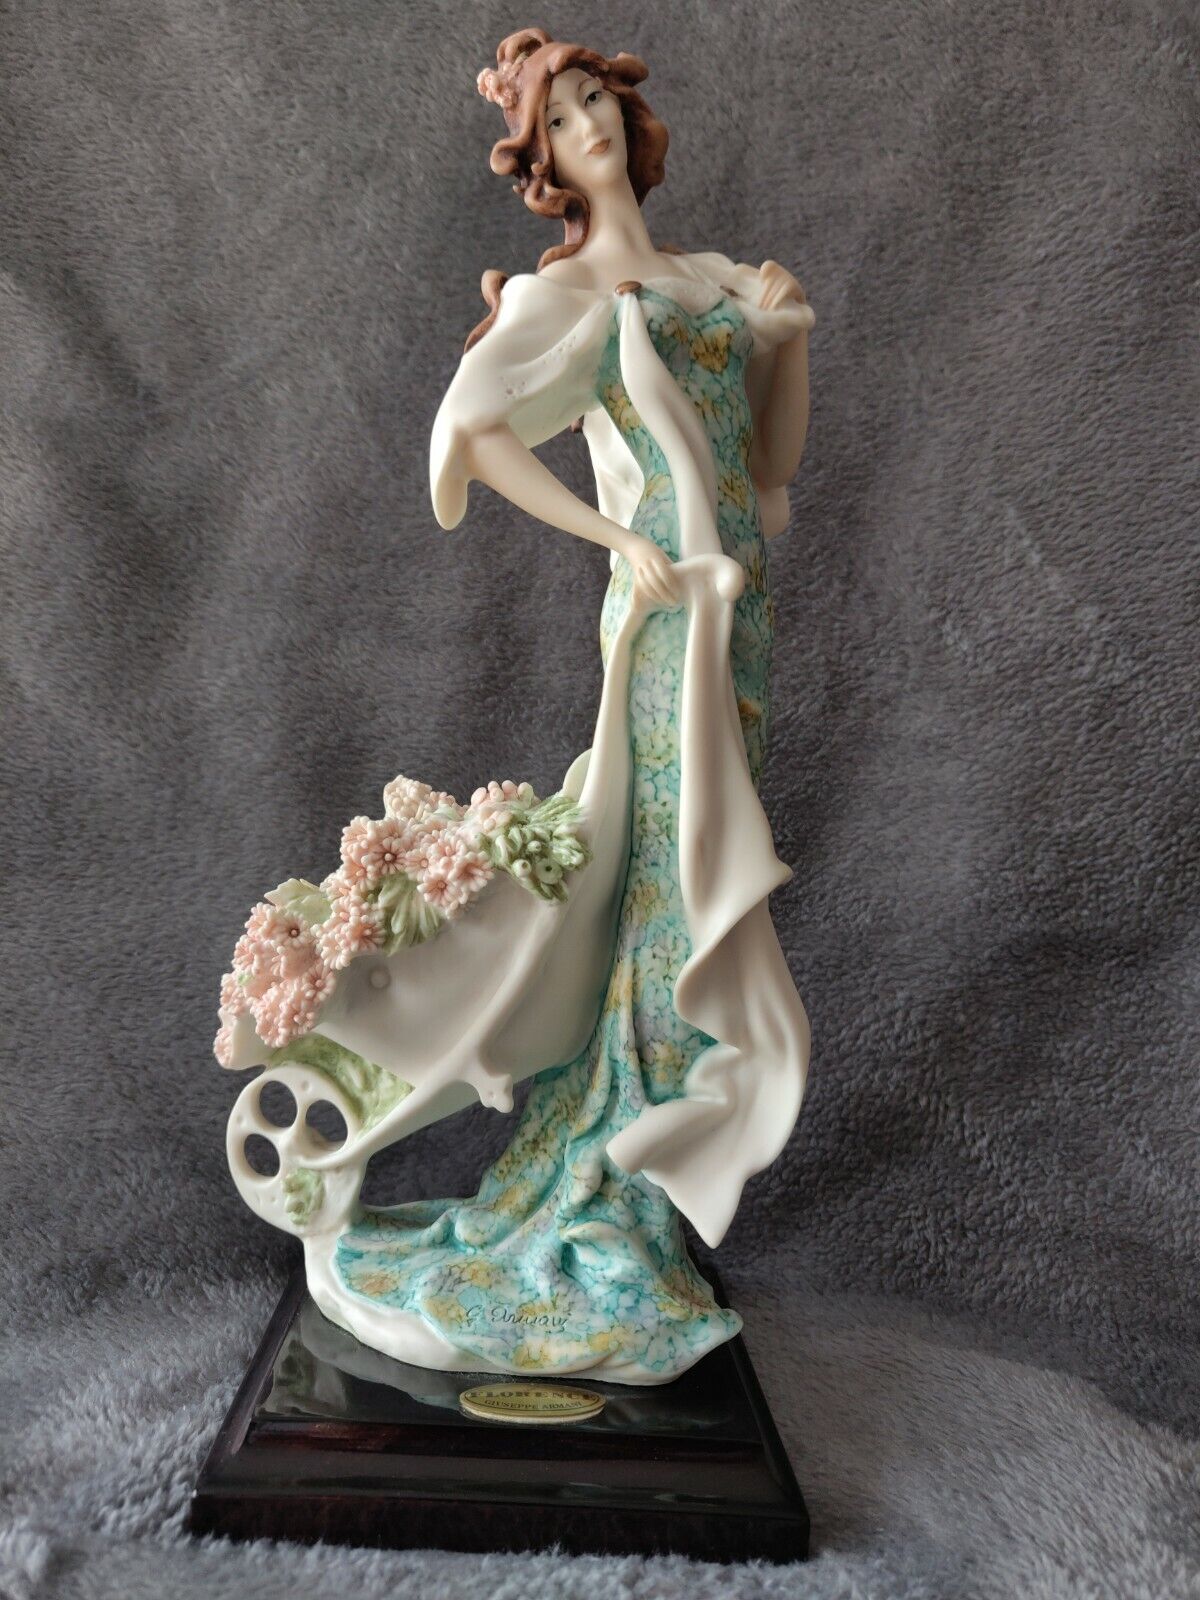 Giuseppe Armani Signed figurine Florence Lady With Wheelbarrow -Retired 1987